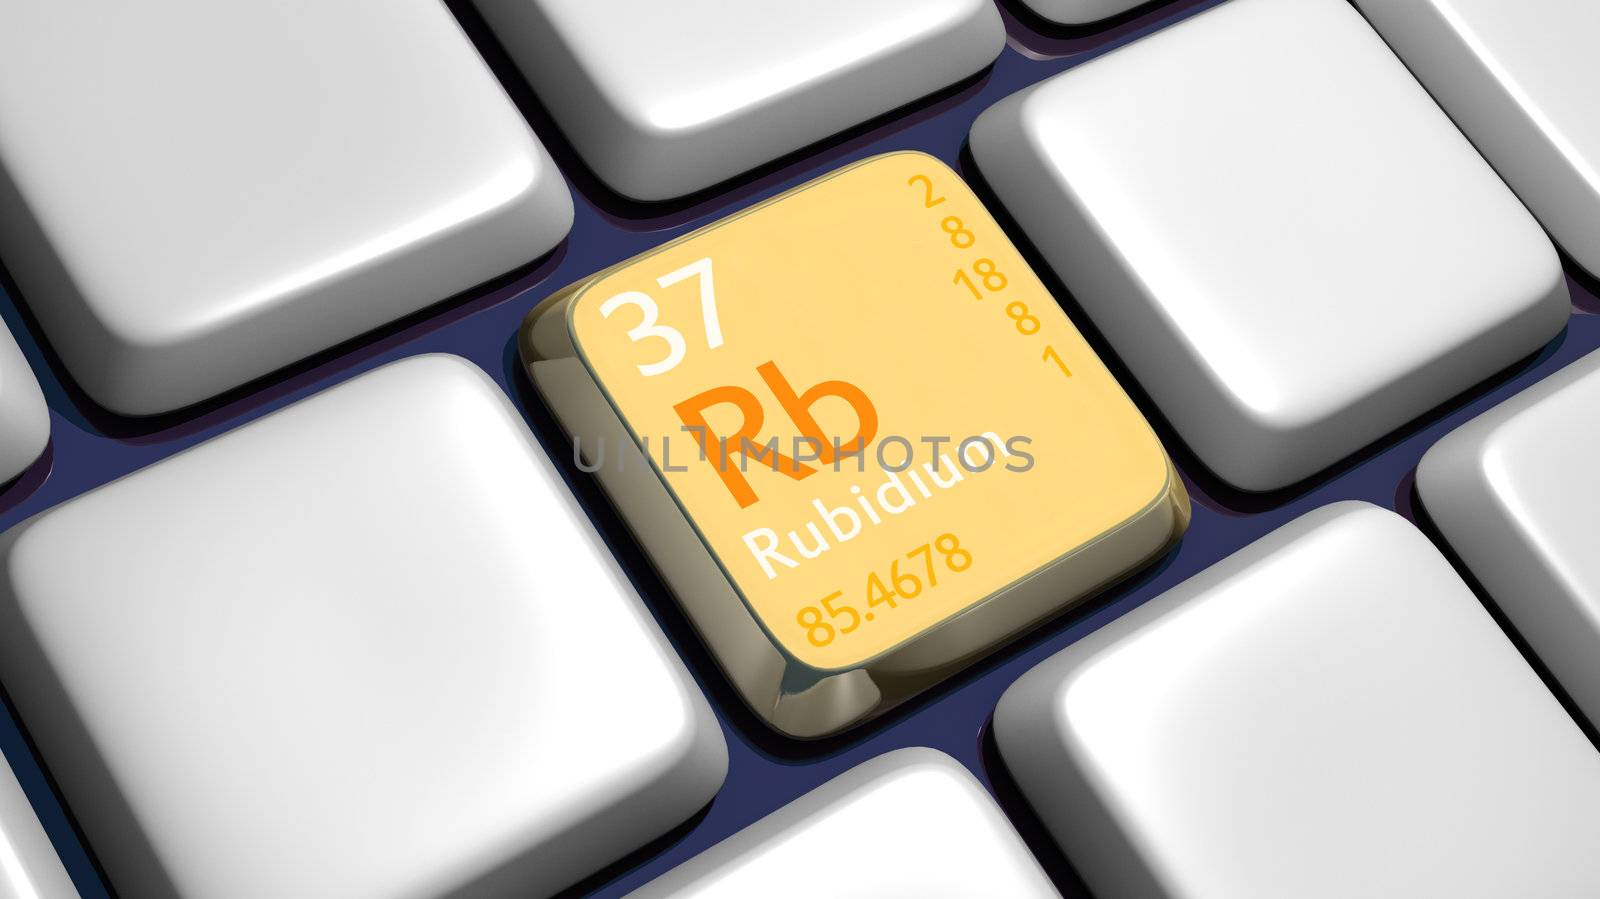 Keyboard (detail) with Rubidium element - 3d made 